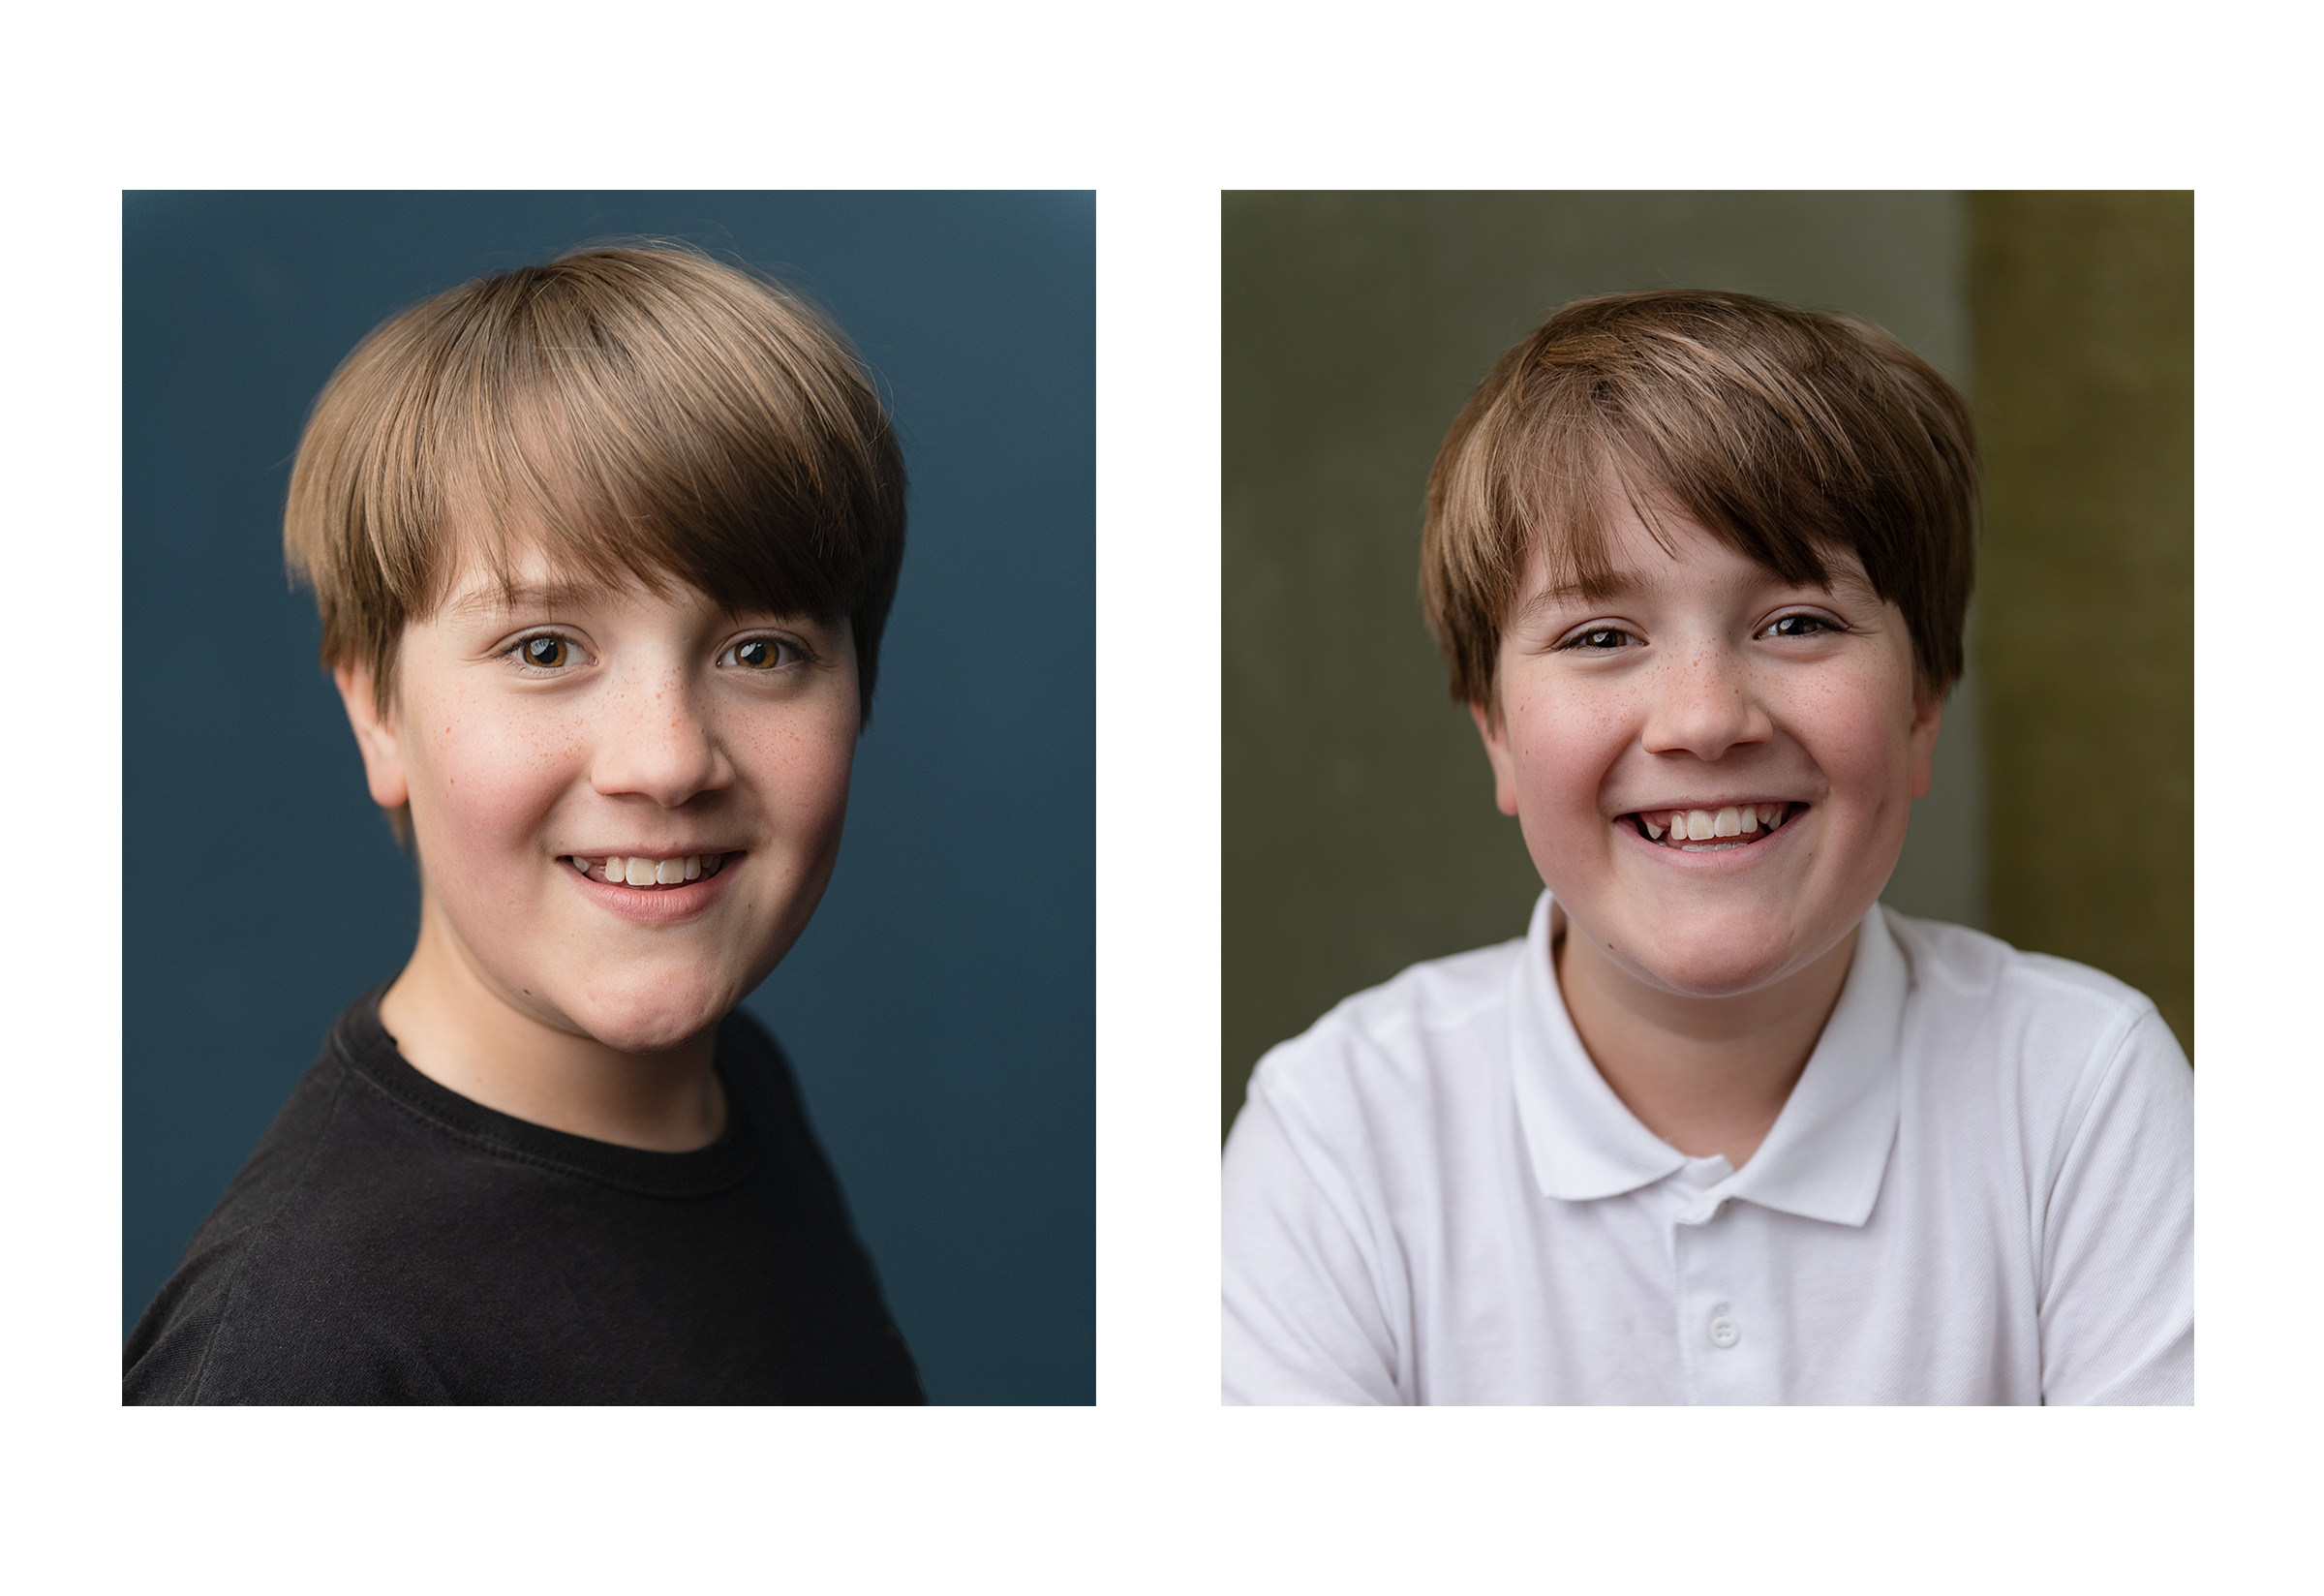 Child young actor casting headshots for spotlight Keston & keston